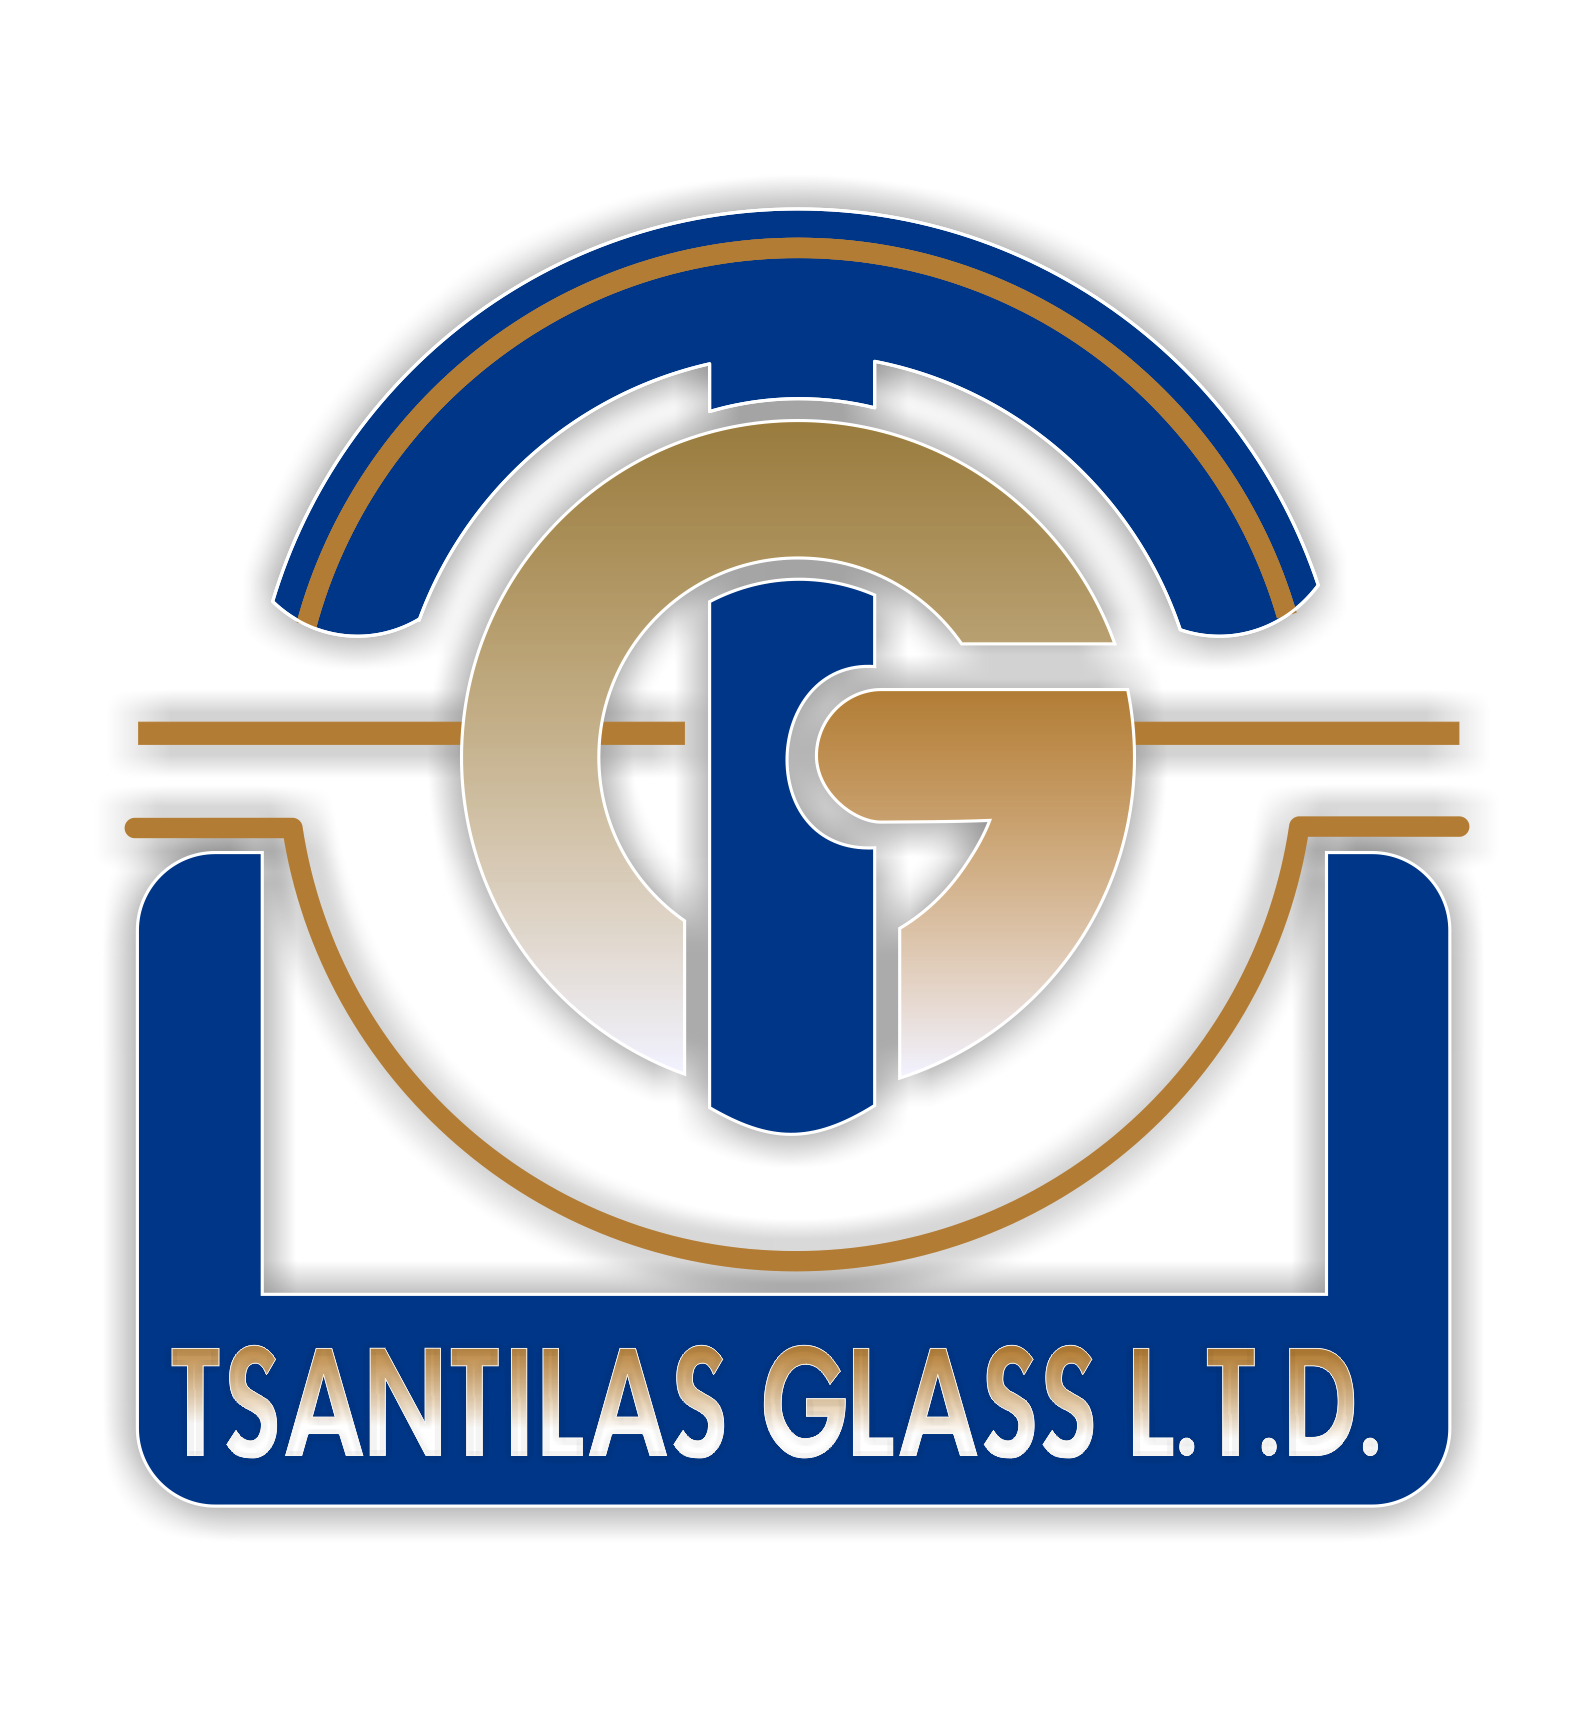 TSANTILAS GLASS LTD